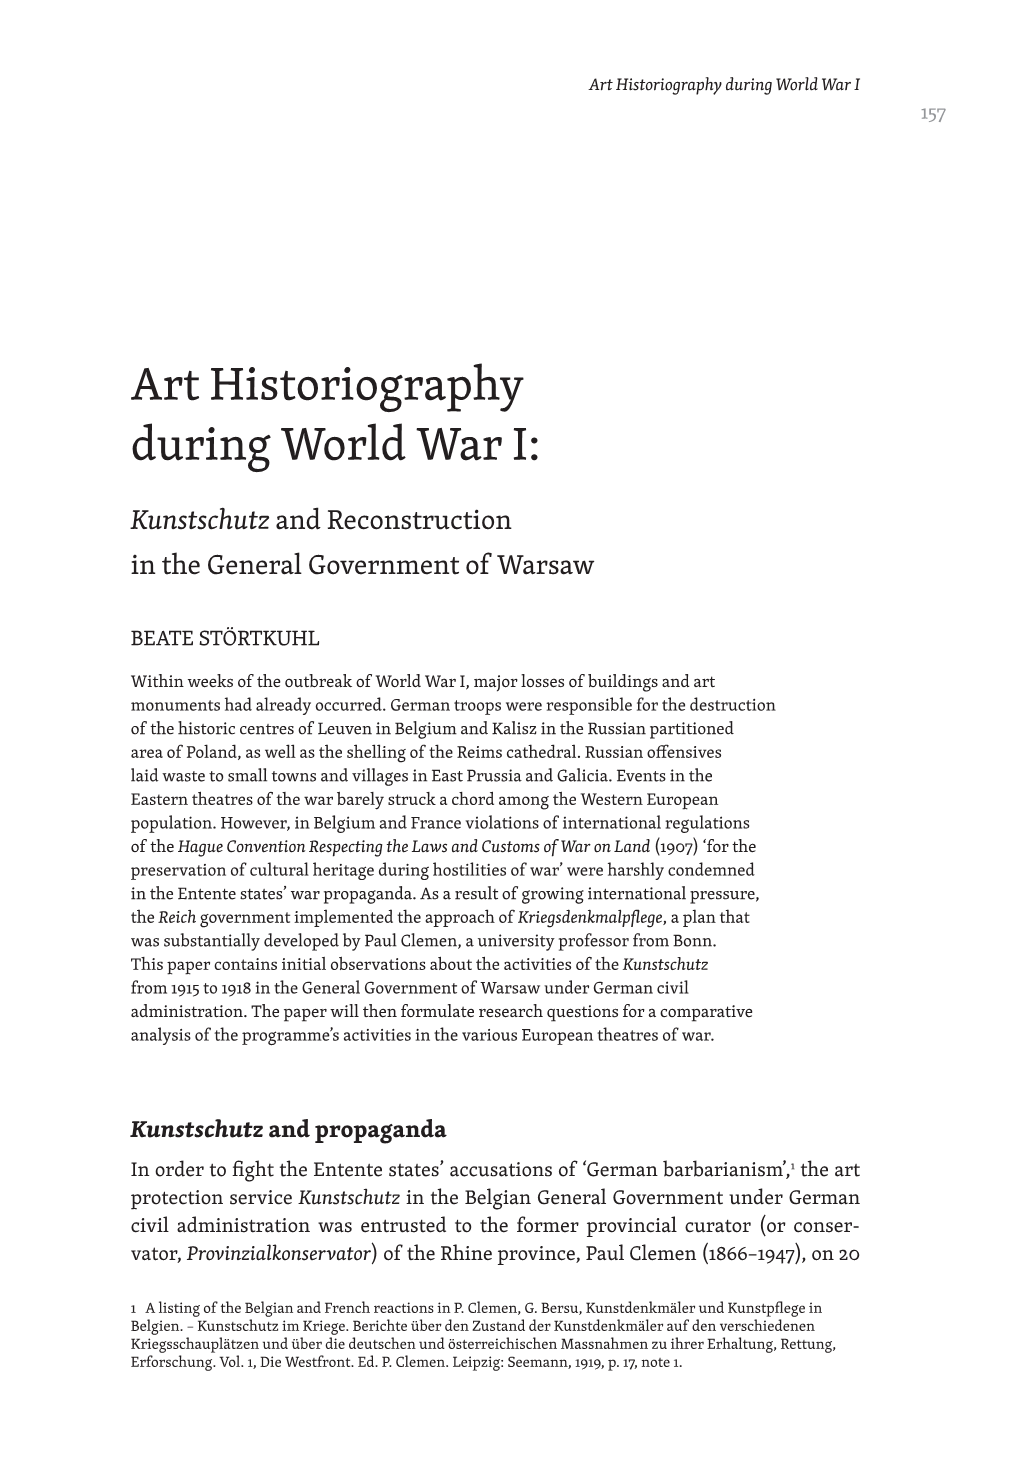 Art Historiography During World War I